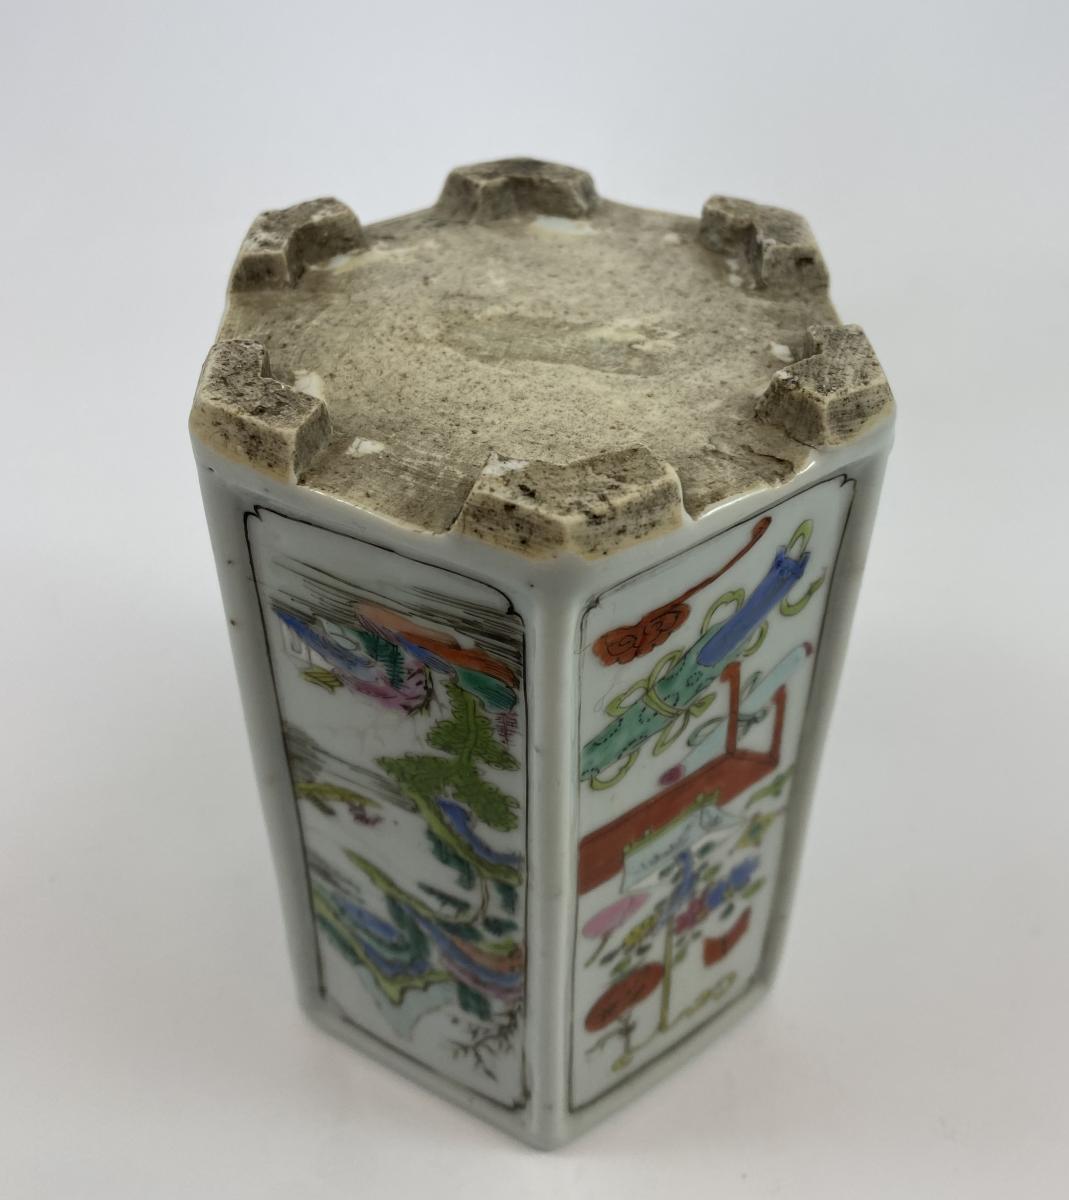 Chinese porcelain brush pot, circa 1730, Yongzheng Period